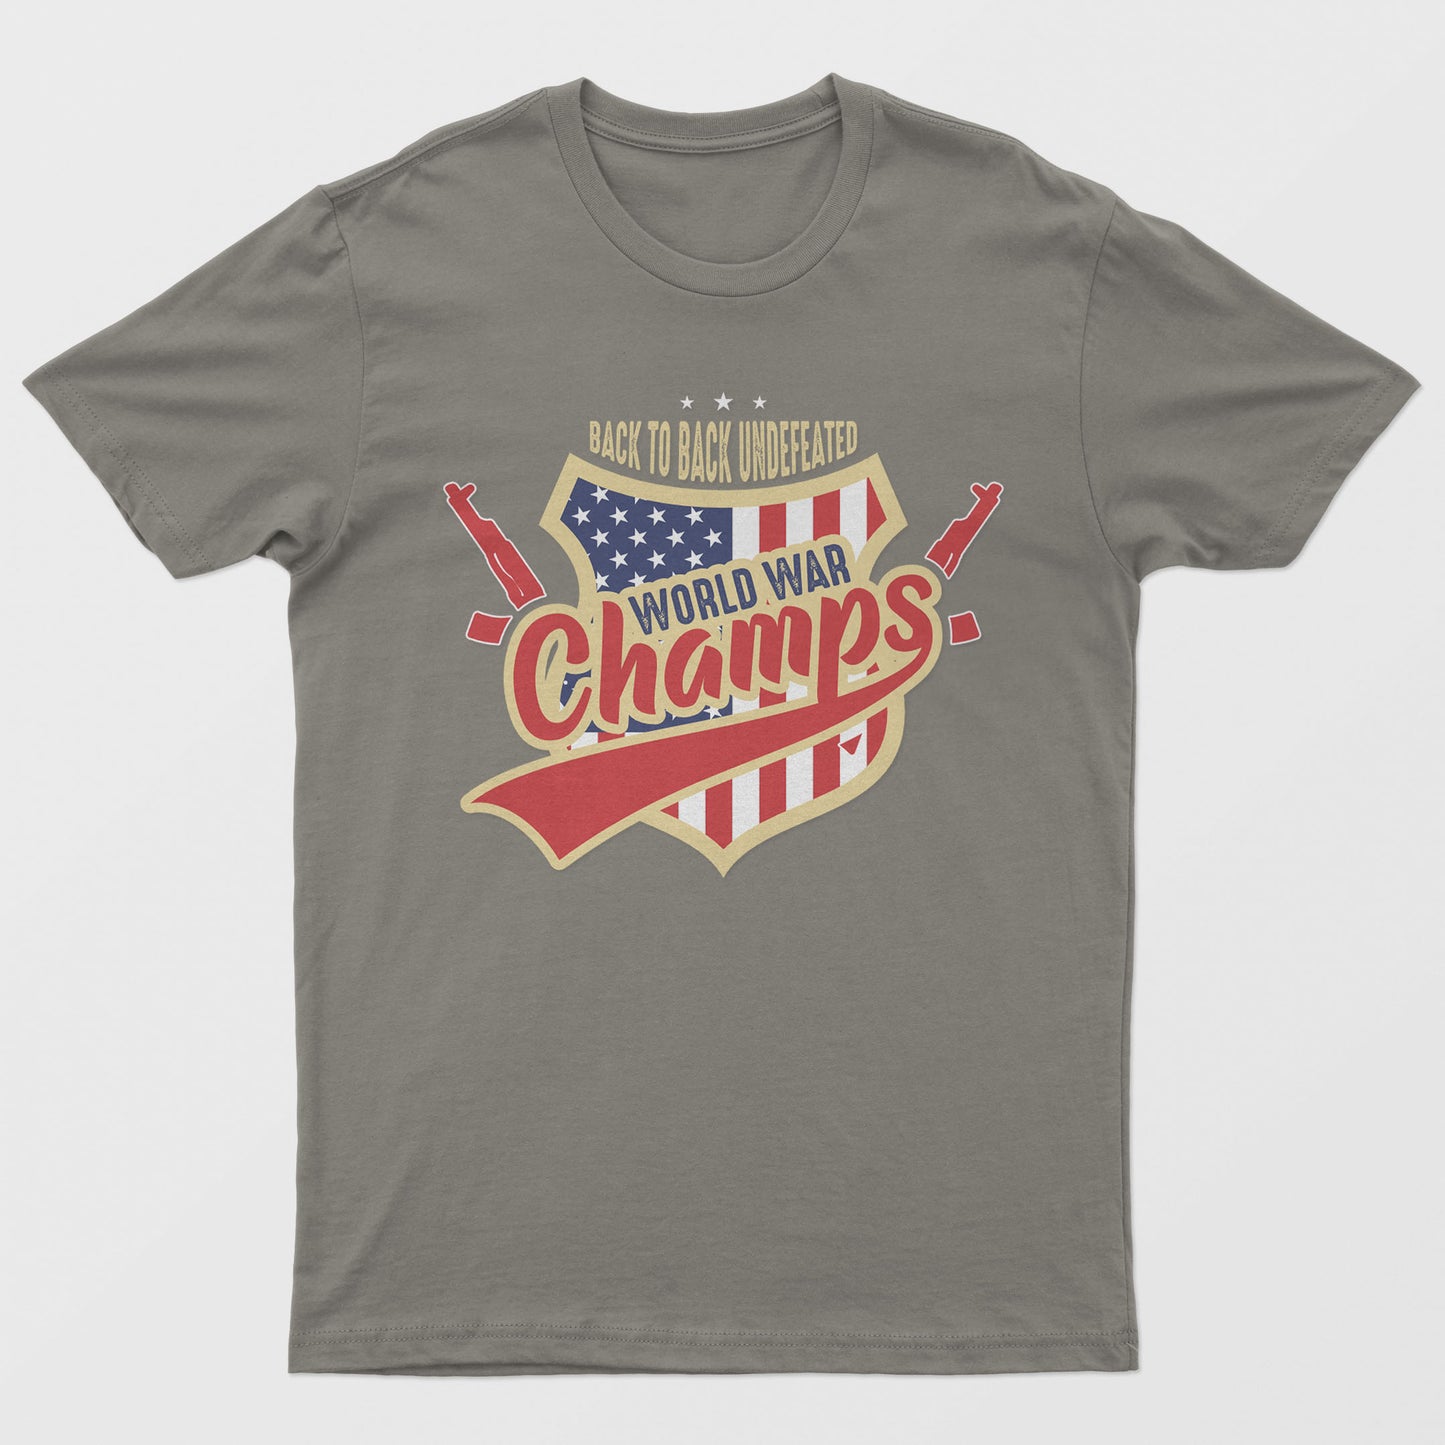 World War Champs Graphic Print Unisex T-Shirt: S-XXXL, Various Colors, Free Ship